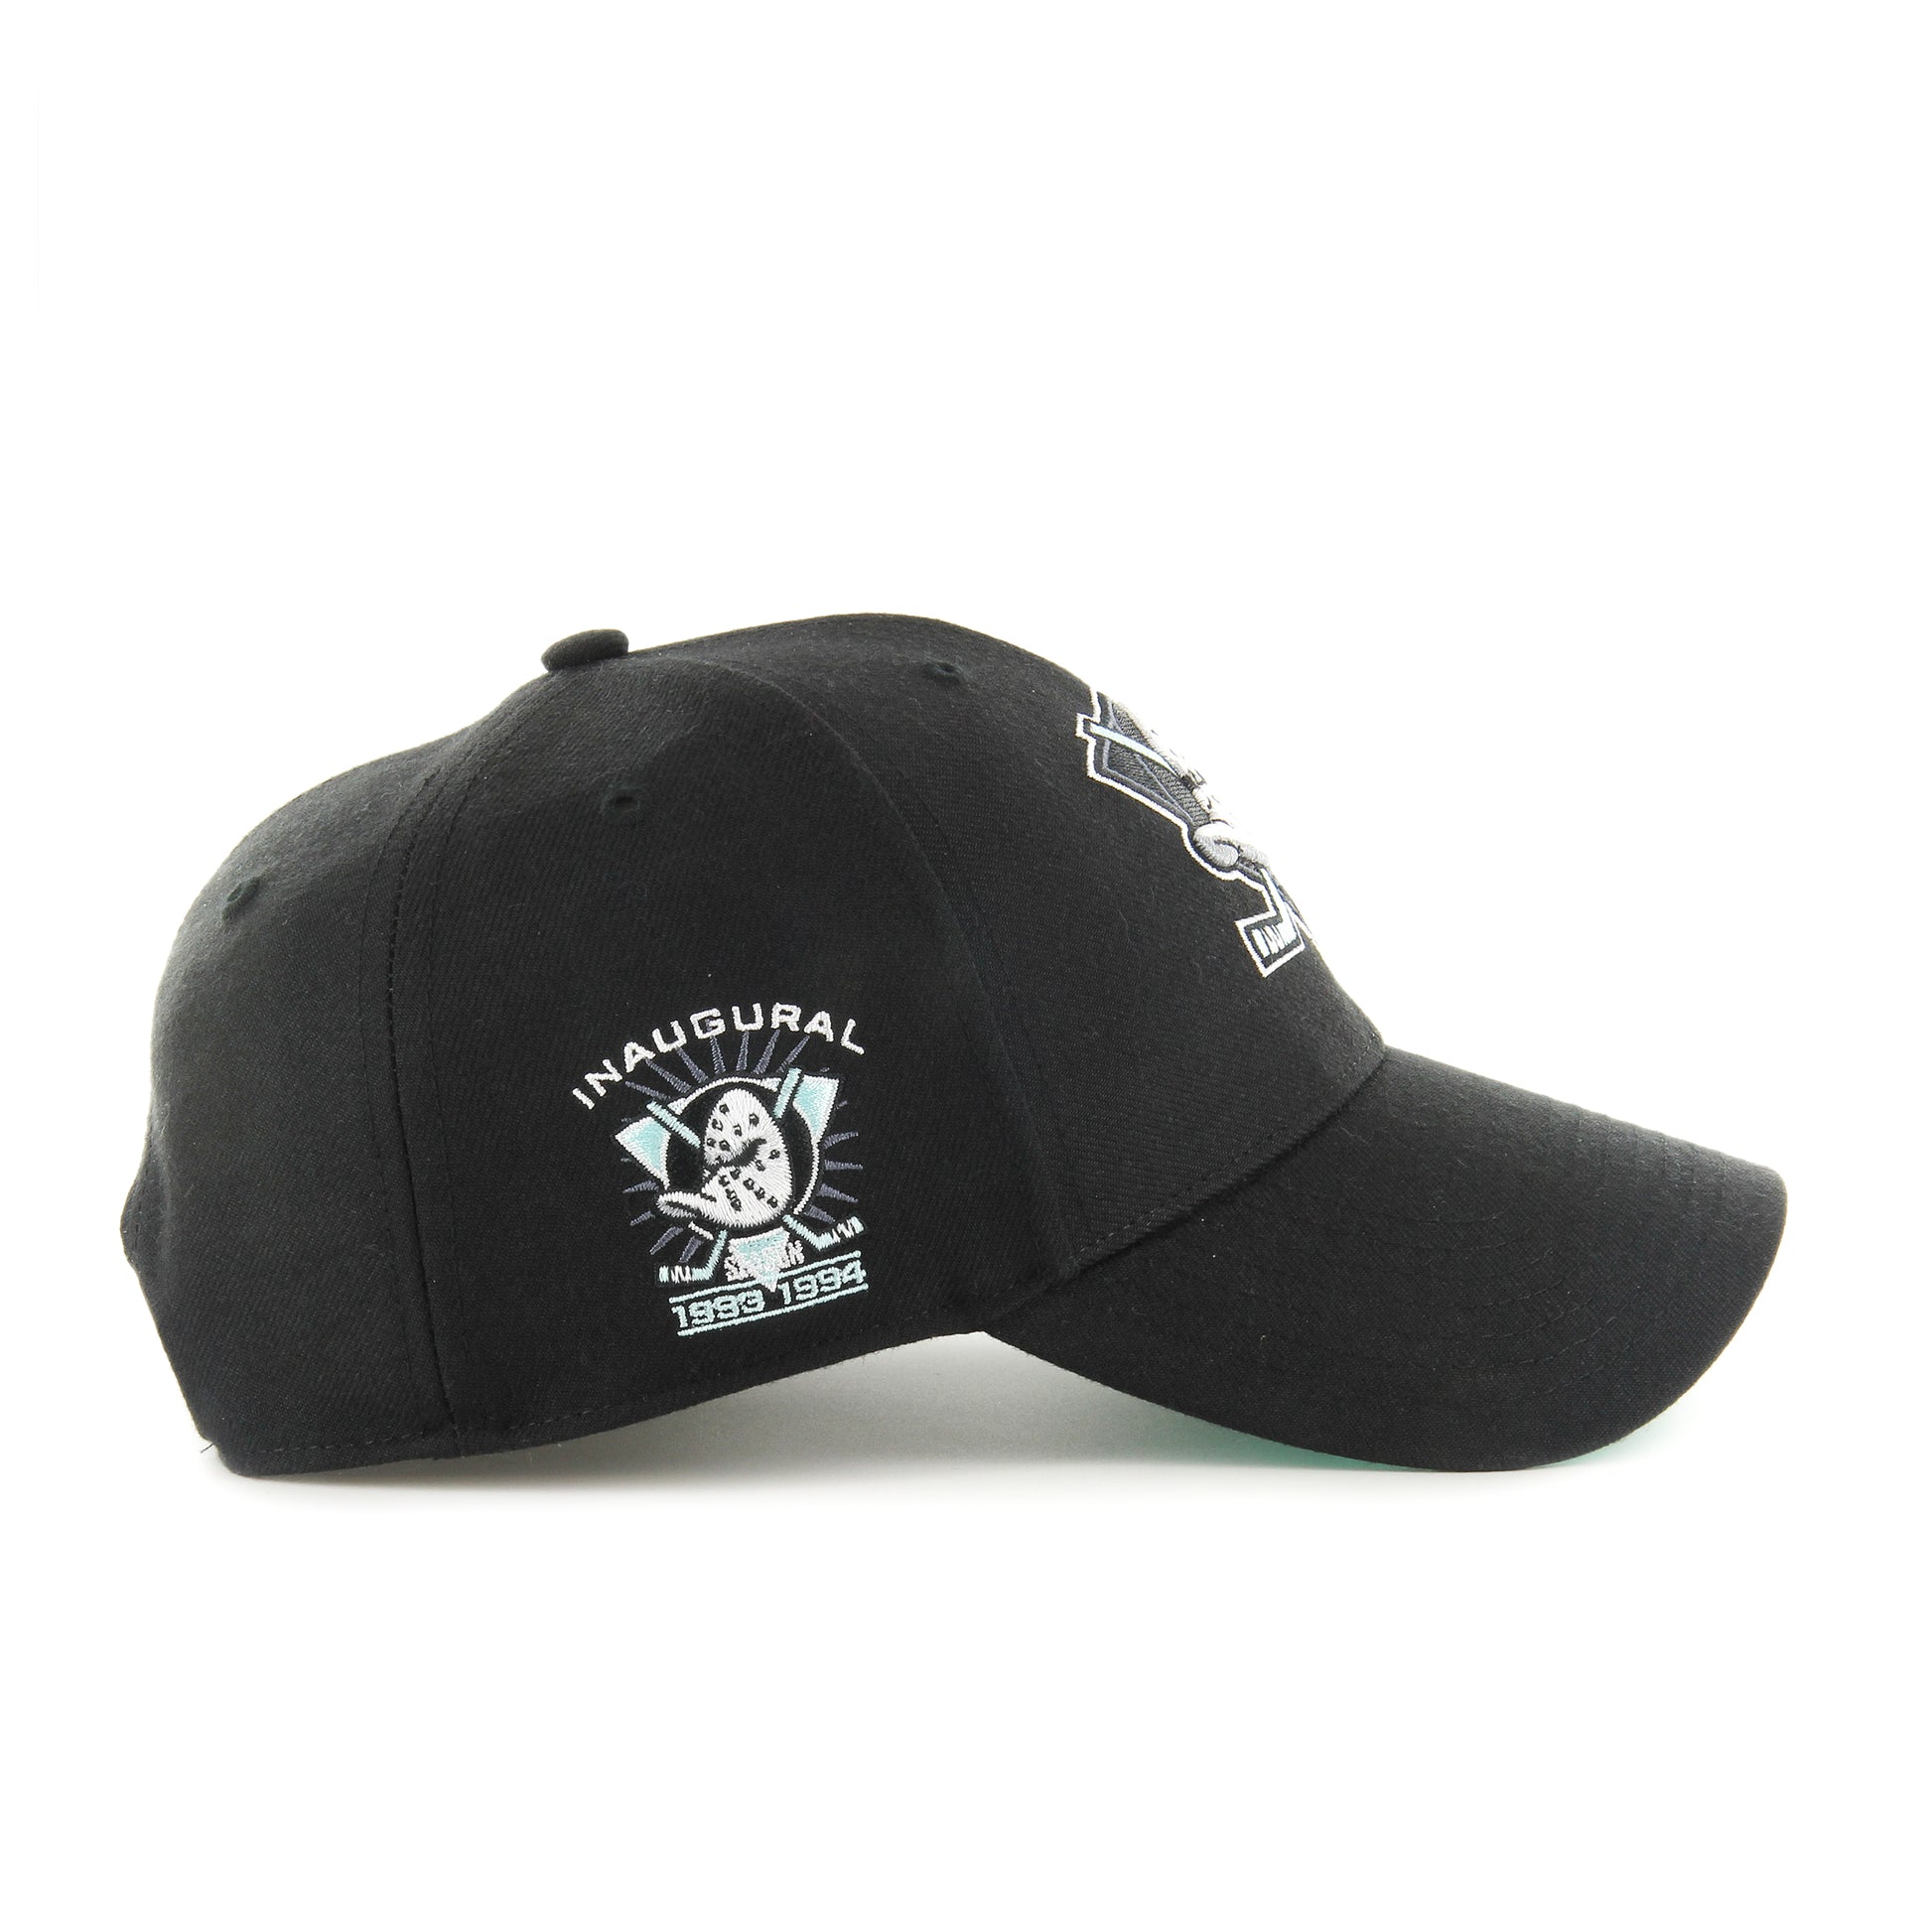 47Brand Anaheim Ducks Vintage Dark Teal Sure Shot Ballpark MVP Snapback Hat, 47 BRAND HATS, CAPS